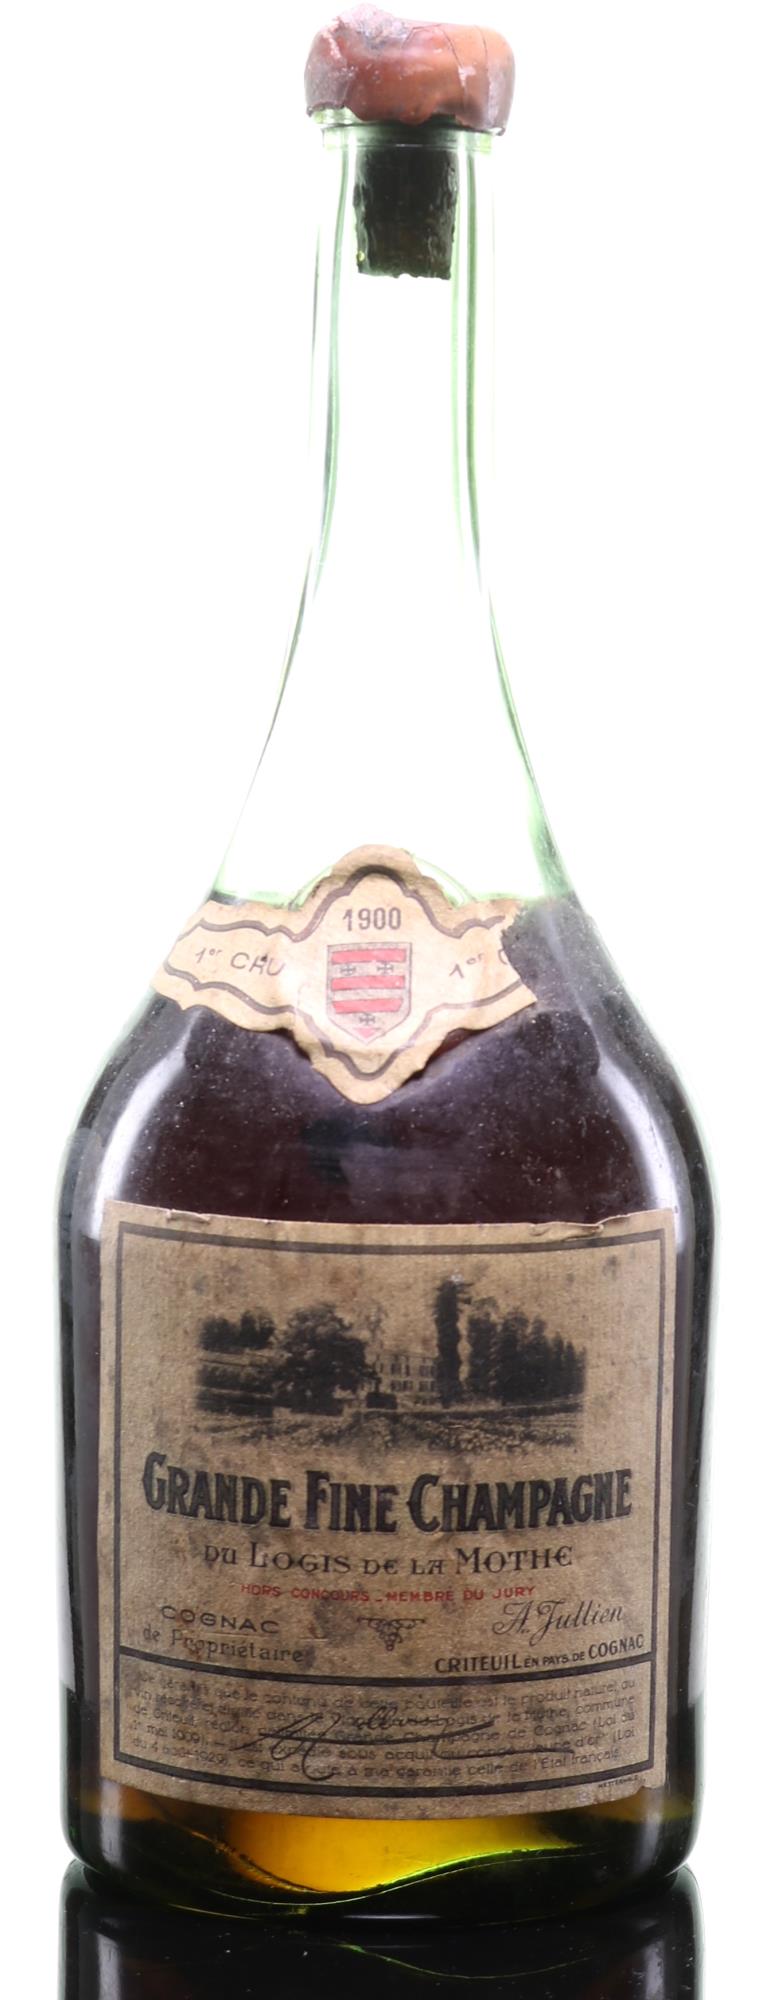 1900 Logis de la Mothe Grande Fine Champagne Cognac - Rue Pinard